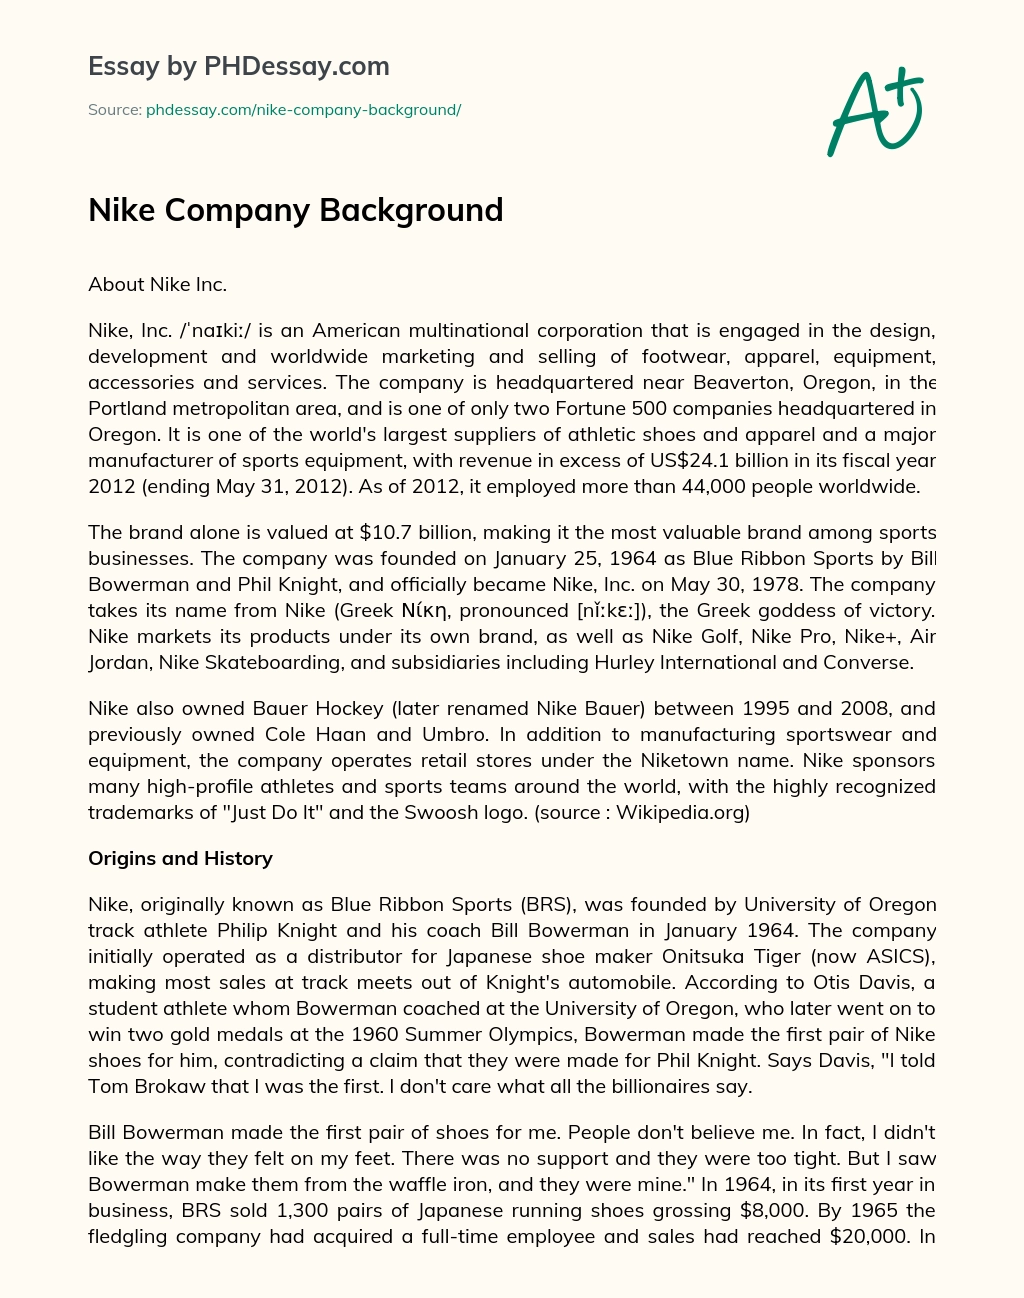 nike company history and background